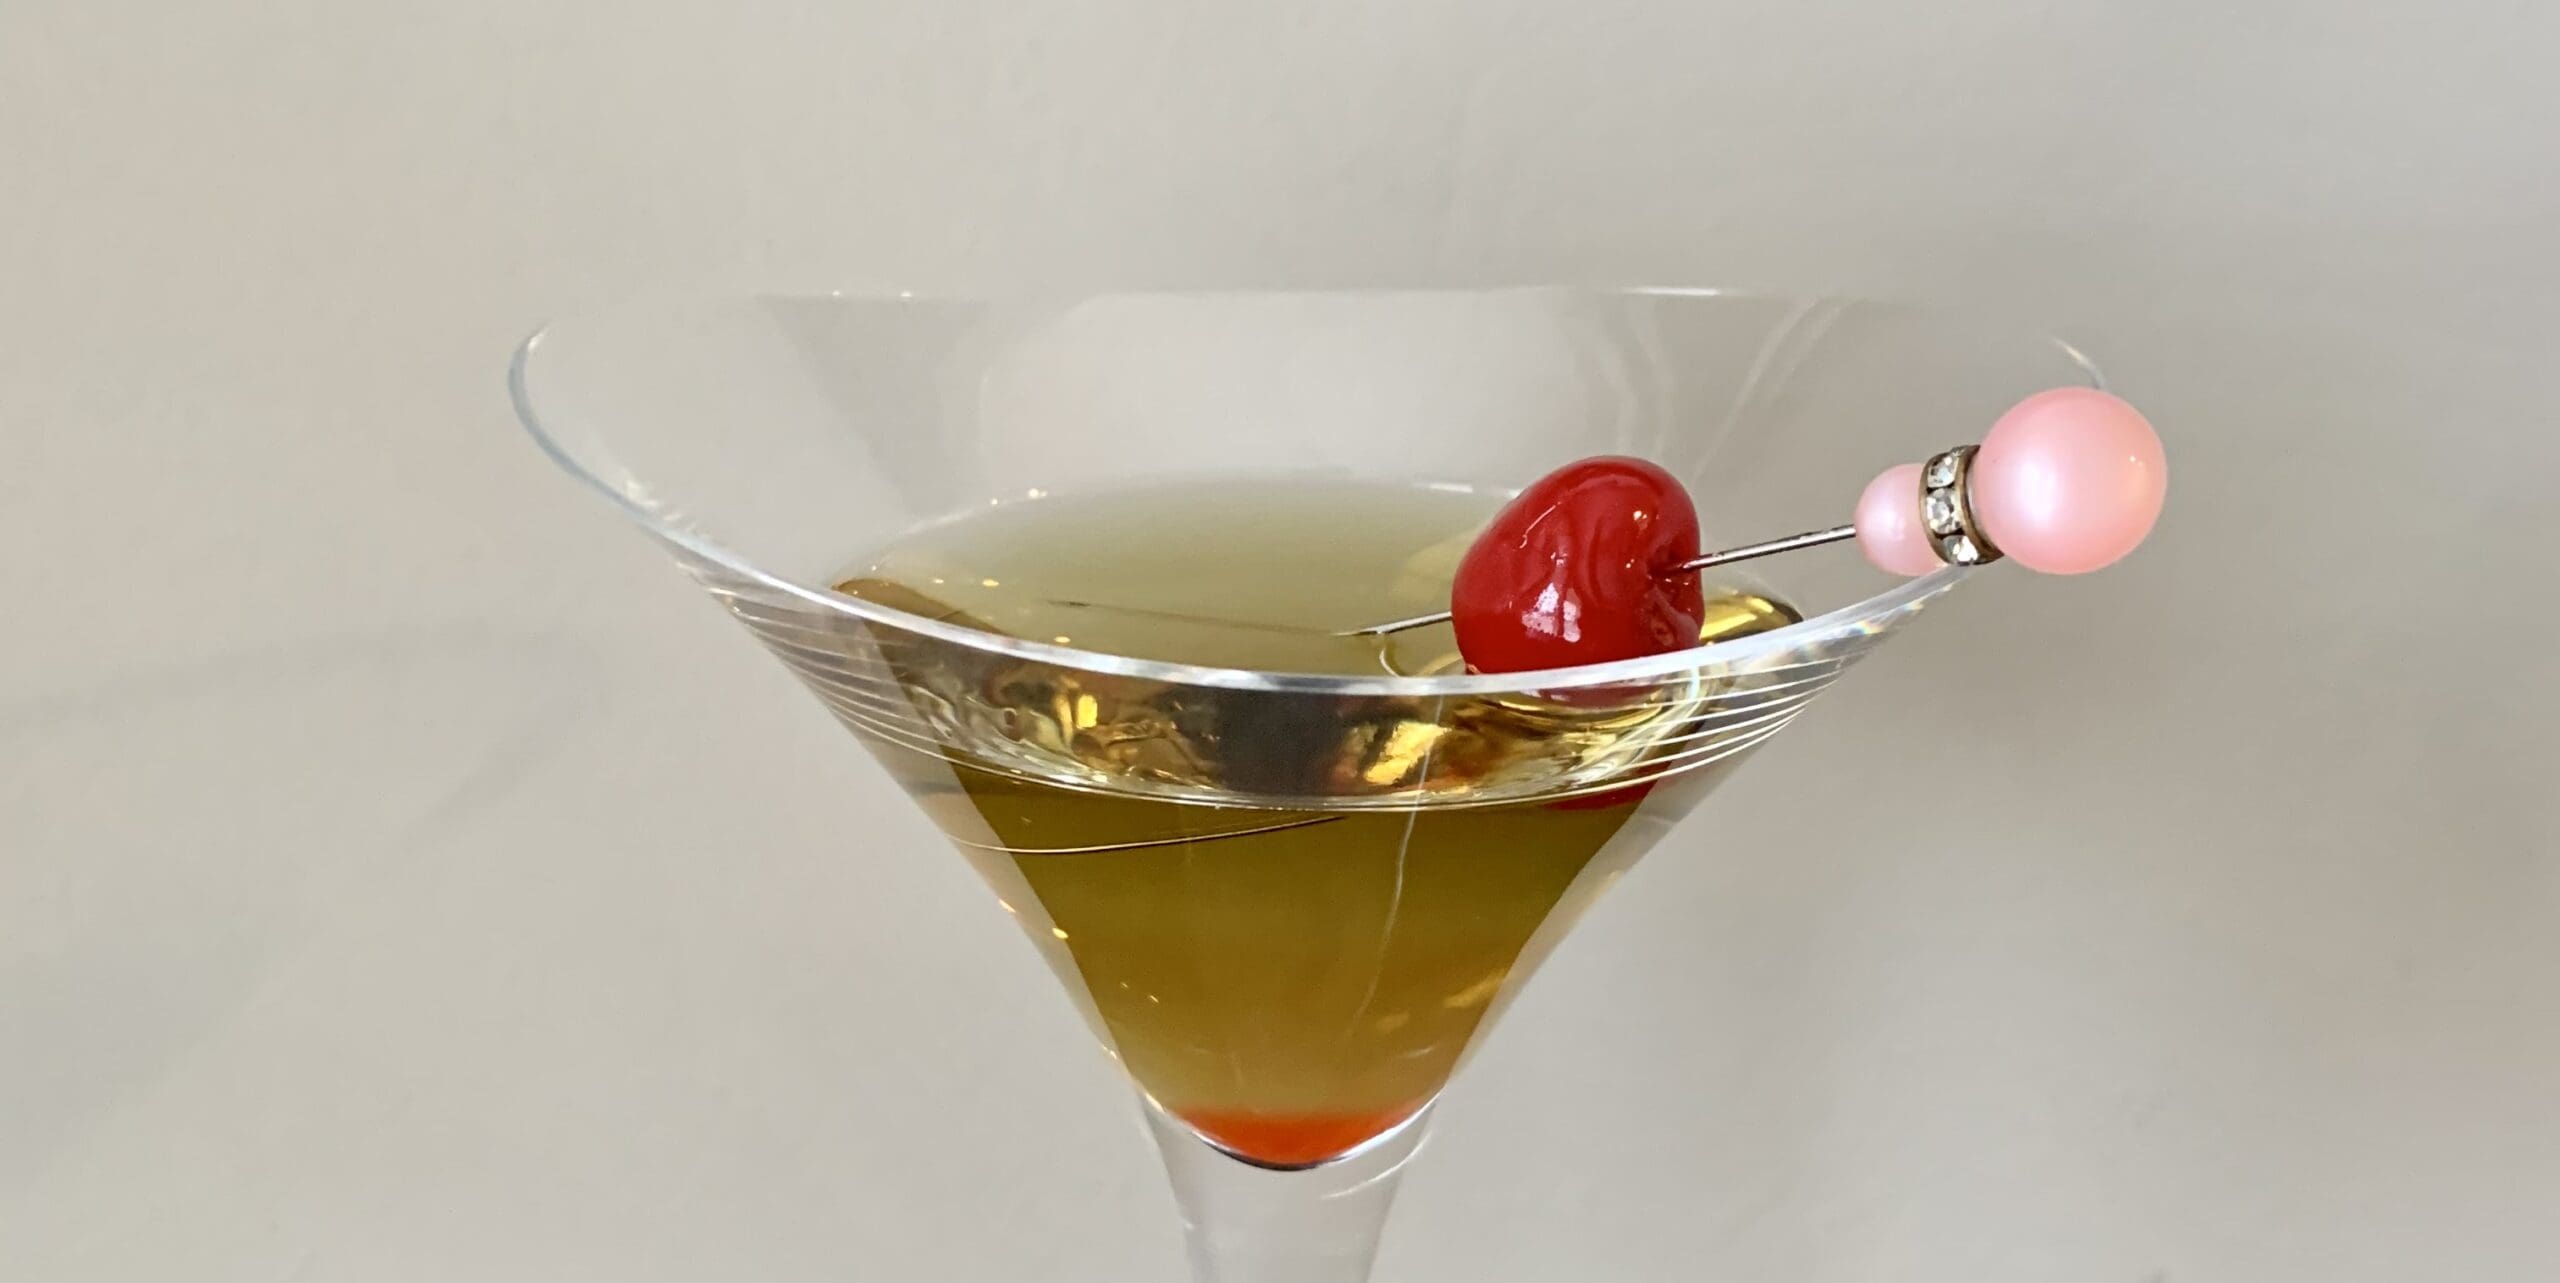 bijou cocktail bar